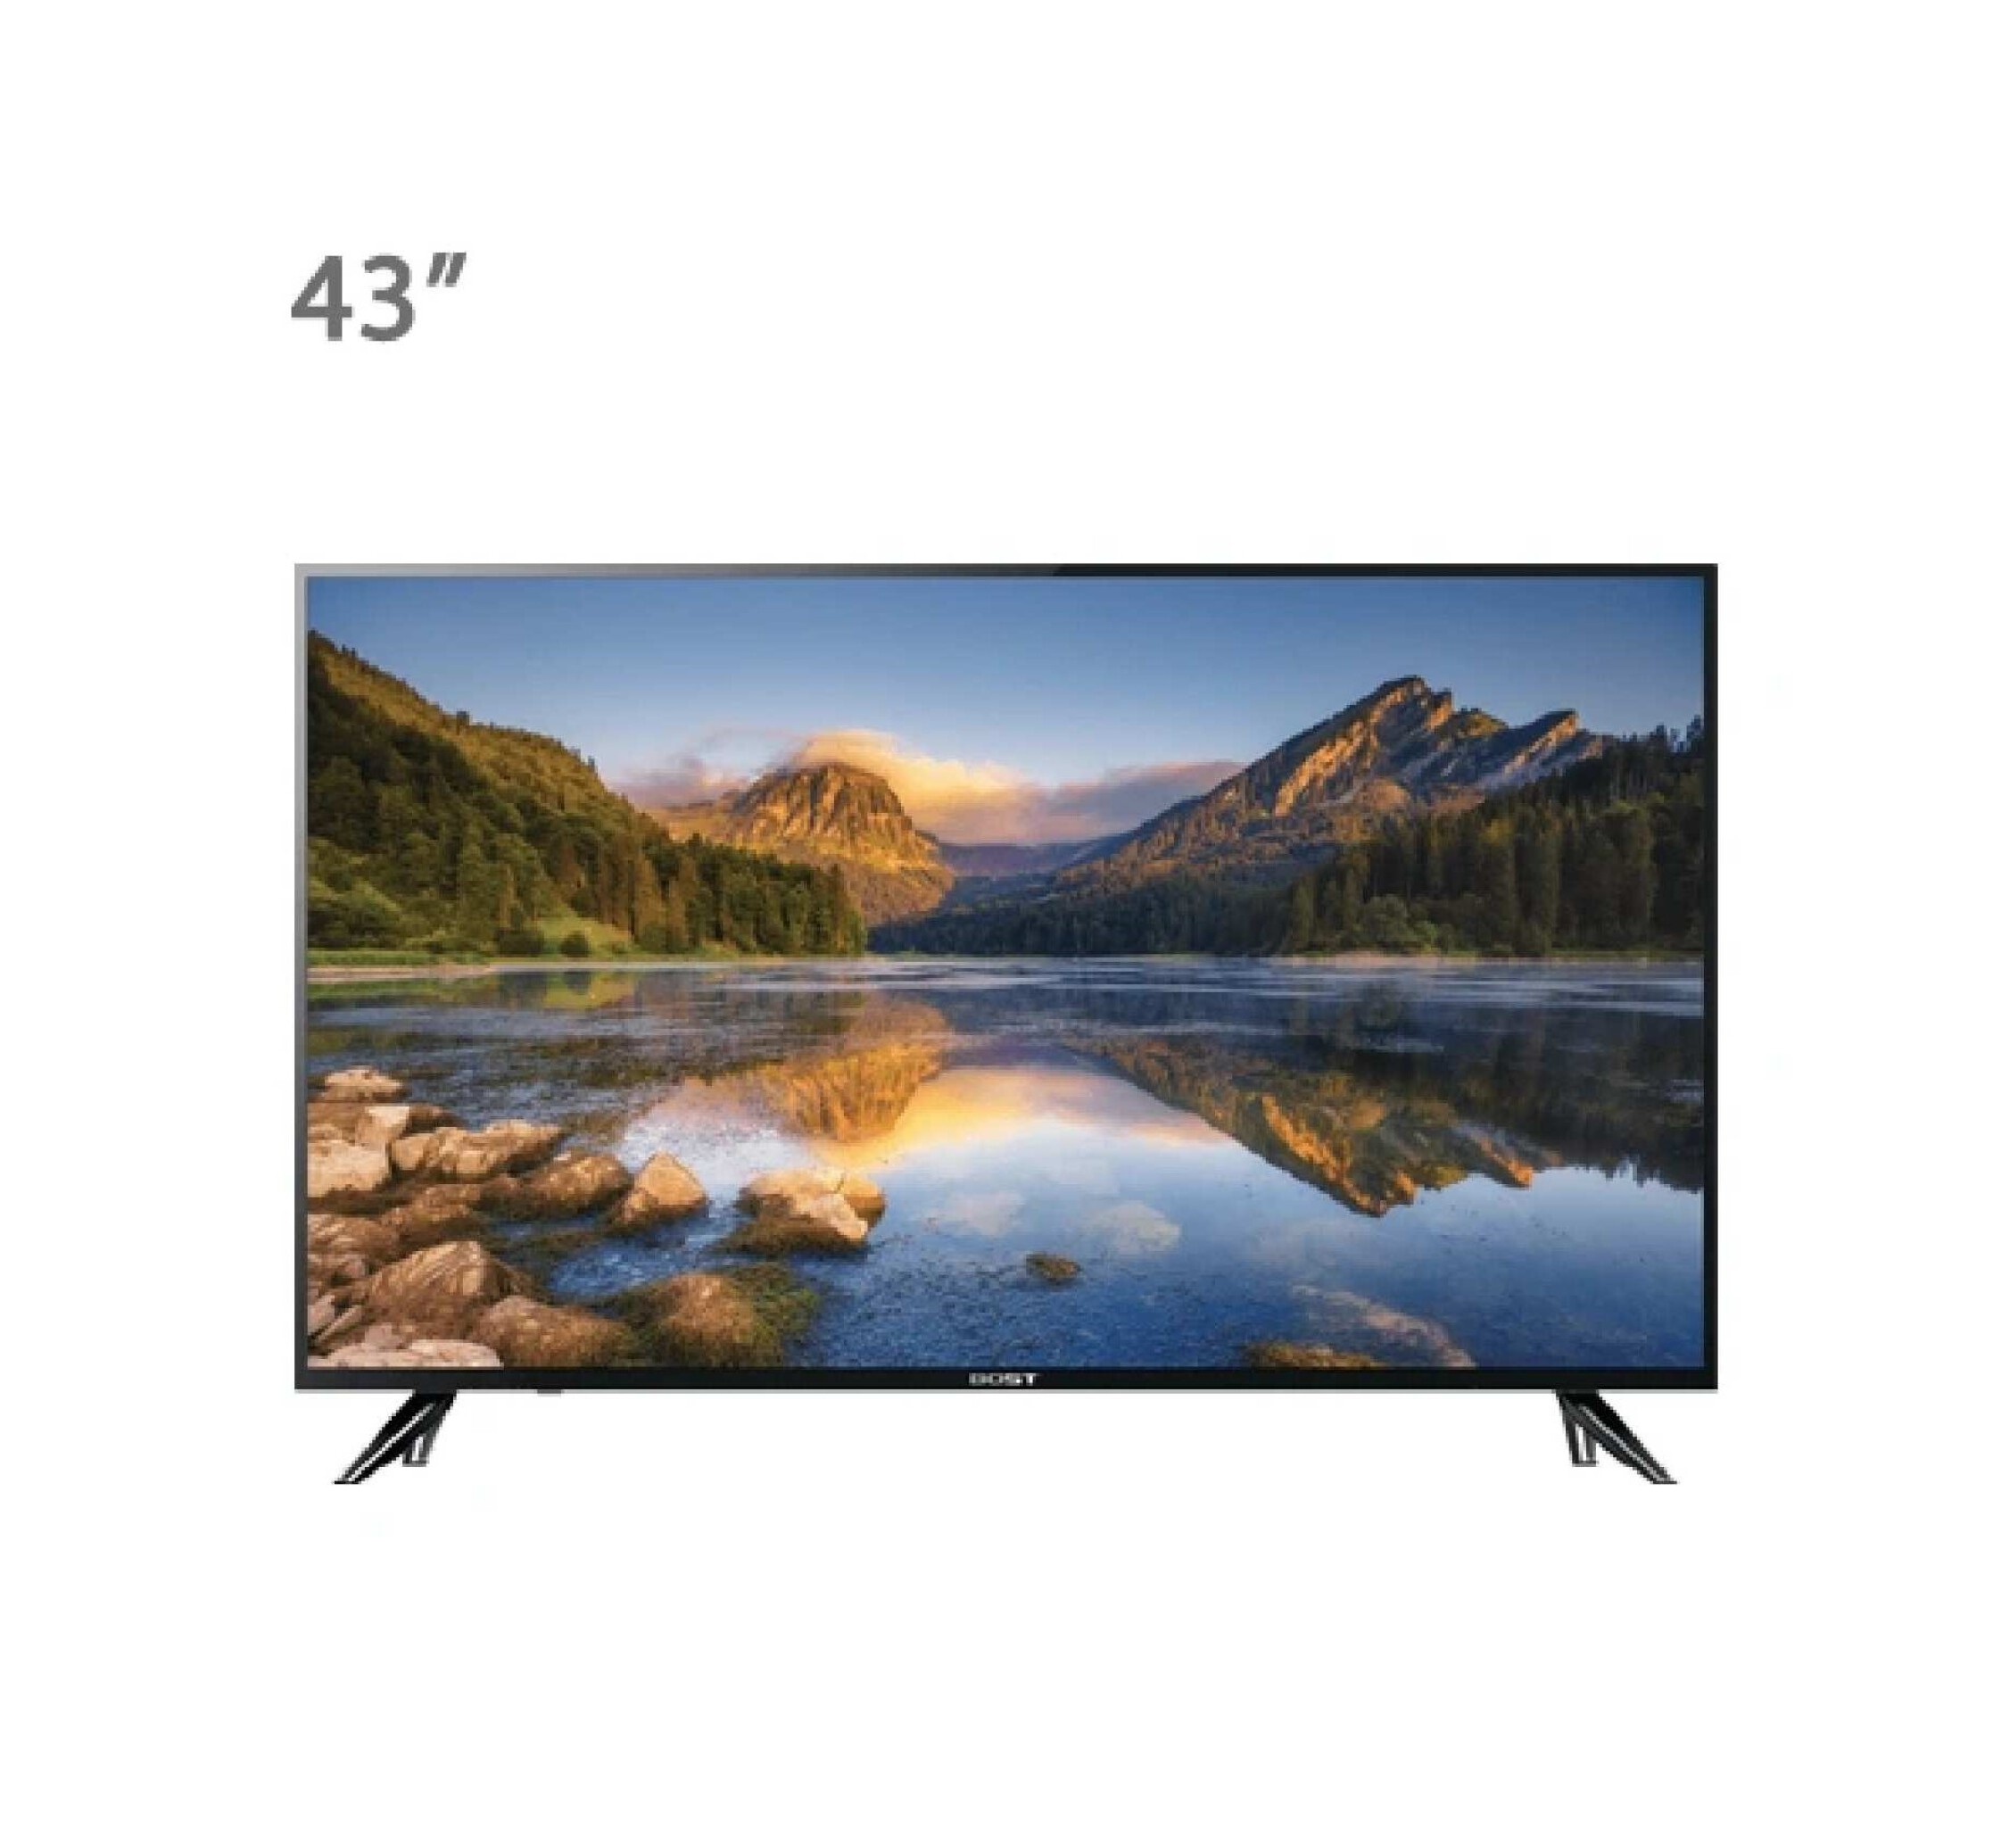  تلویزیون 43 اینچ بست مدل 43BN2075J 